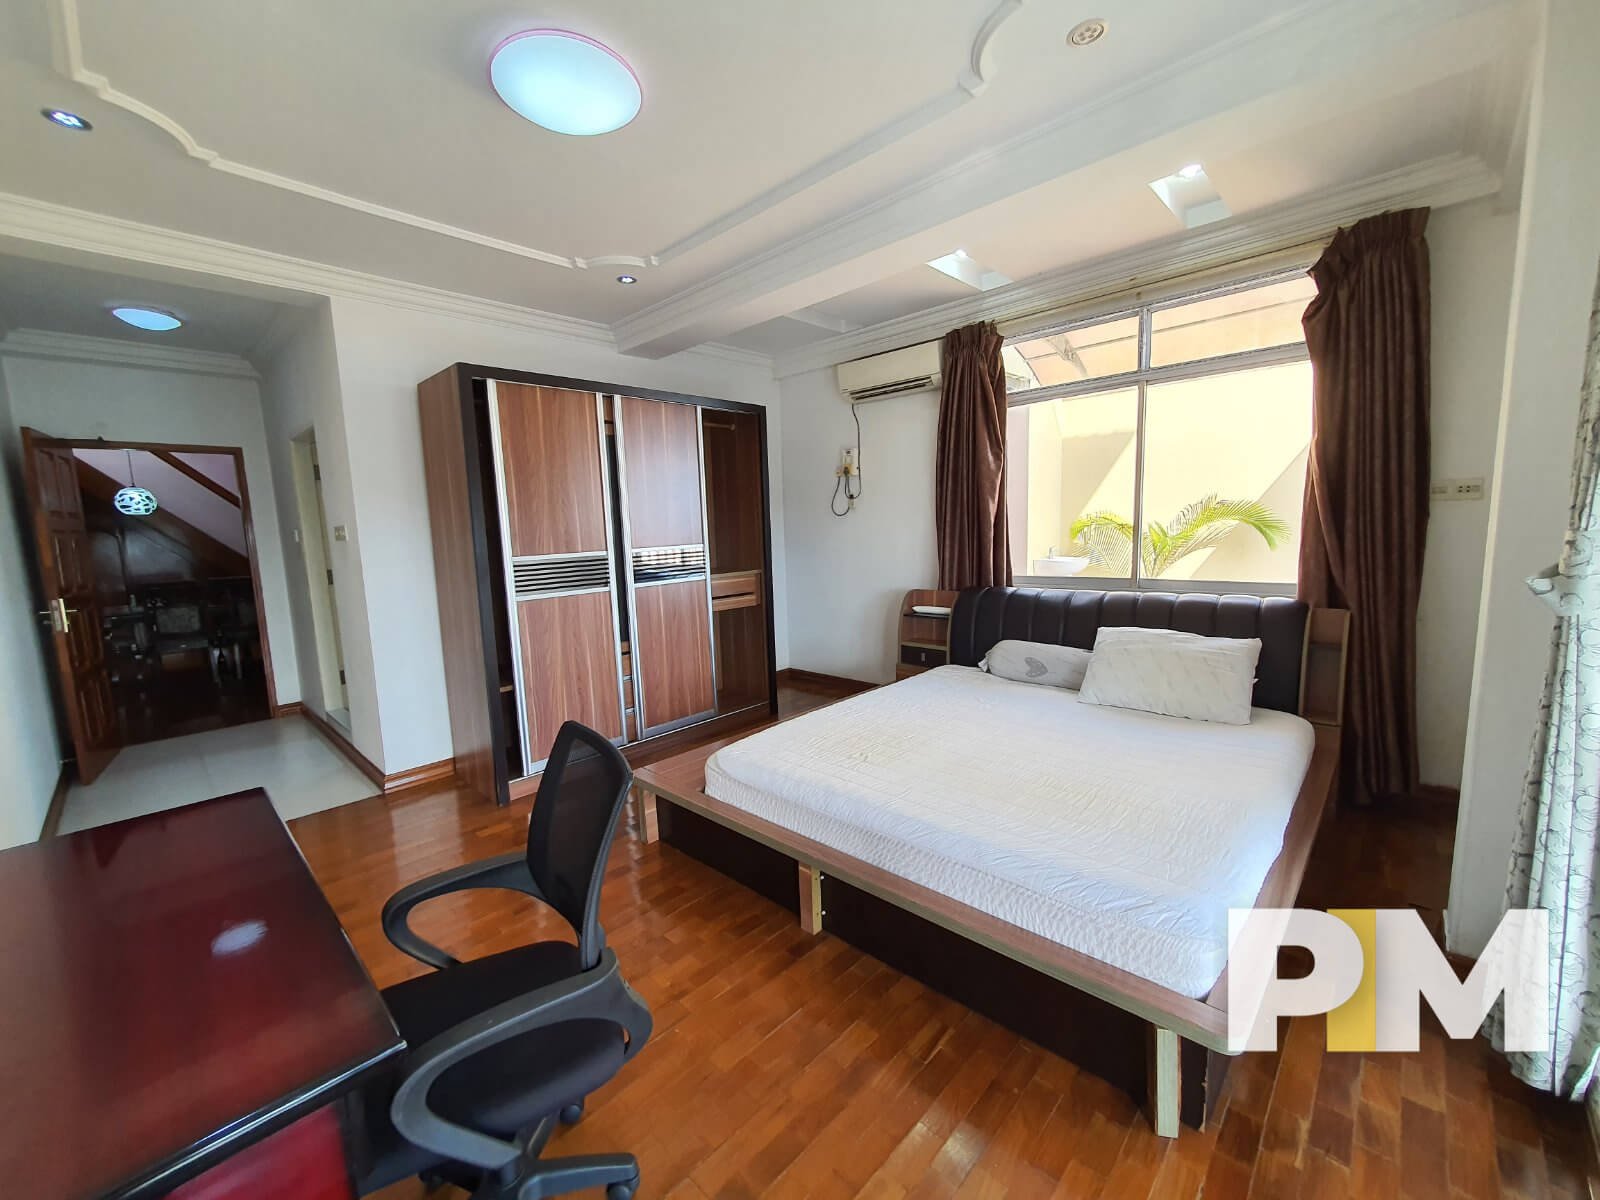 Bedroom with wordrobe - Myanmar Real Estate